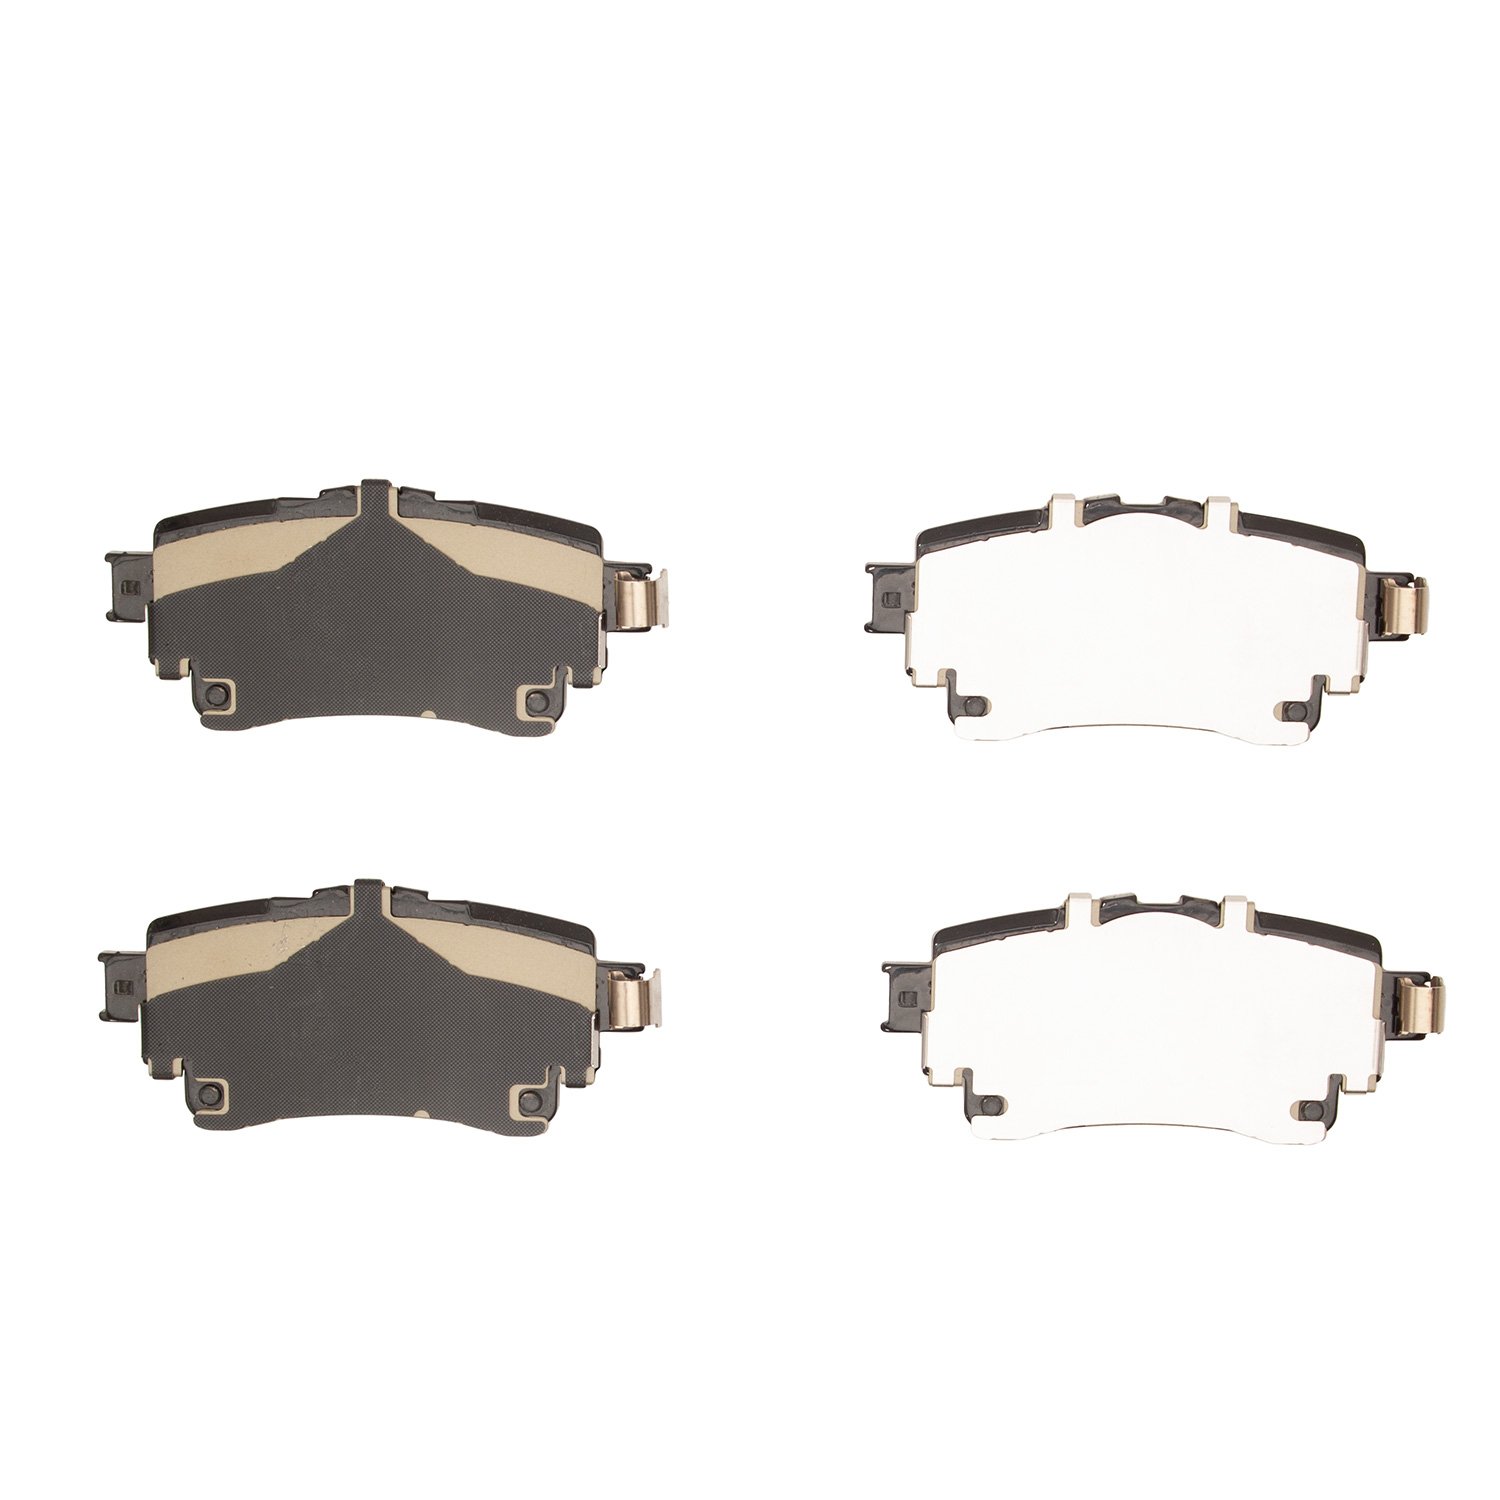 1310-2305-00 3000-Series Ceramic Brake Pads, Fits Select Multiple Makes/Models, Position: Rear